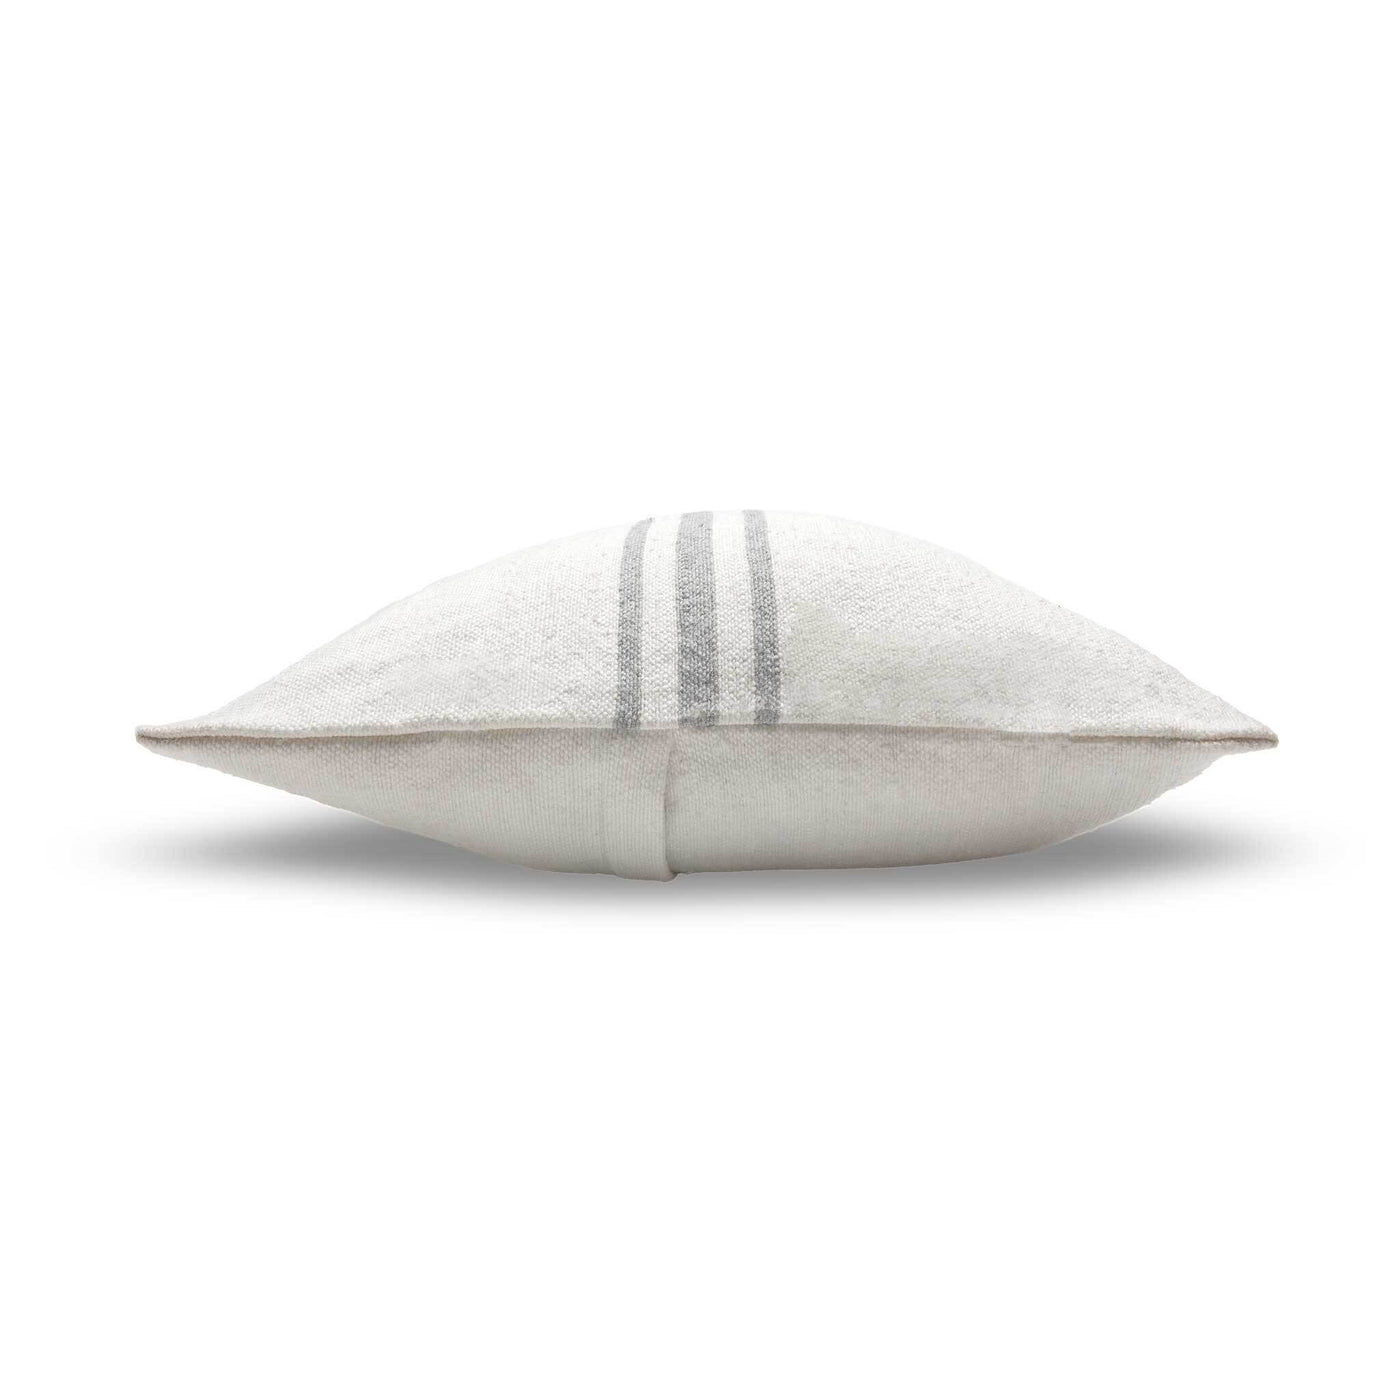 Moroccan Grain Stripe Pillow